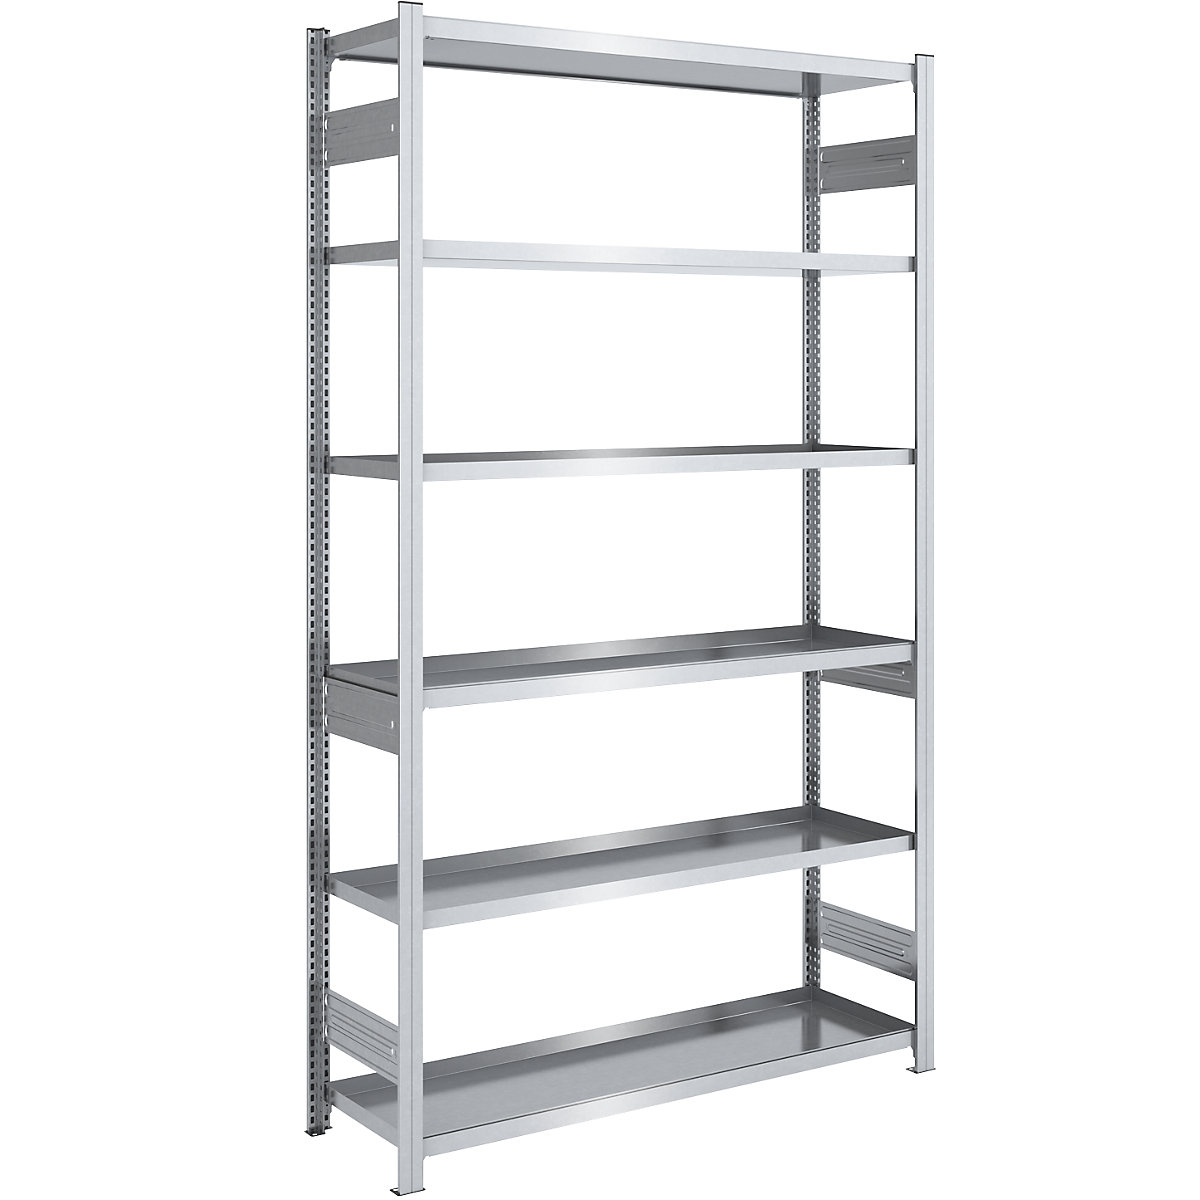 Tray shelf unit – hofe, shelf unit height 2500 mm, tray width 1300 mm, tray depth 500 mm, standard shelf unit